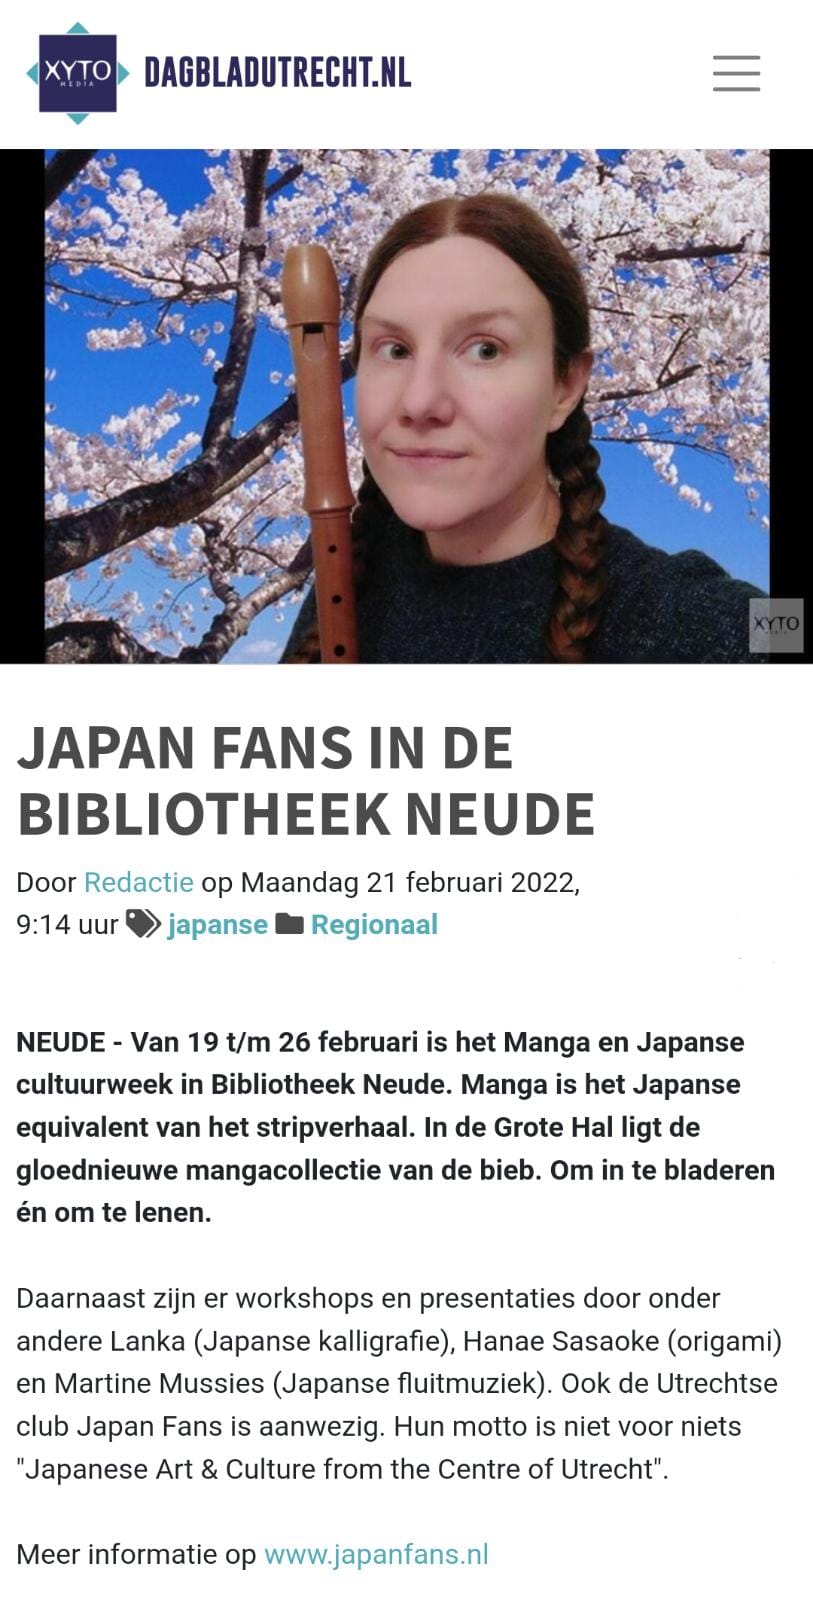 Manga and Japanese Culture Week in bibliotheek Neude Utrecht - Japan Fans